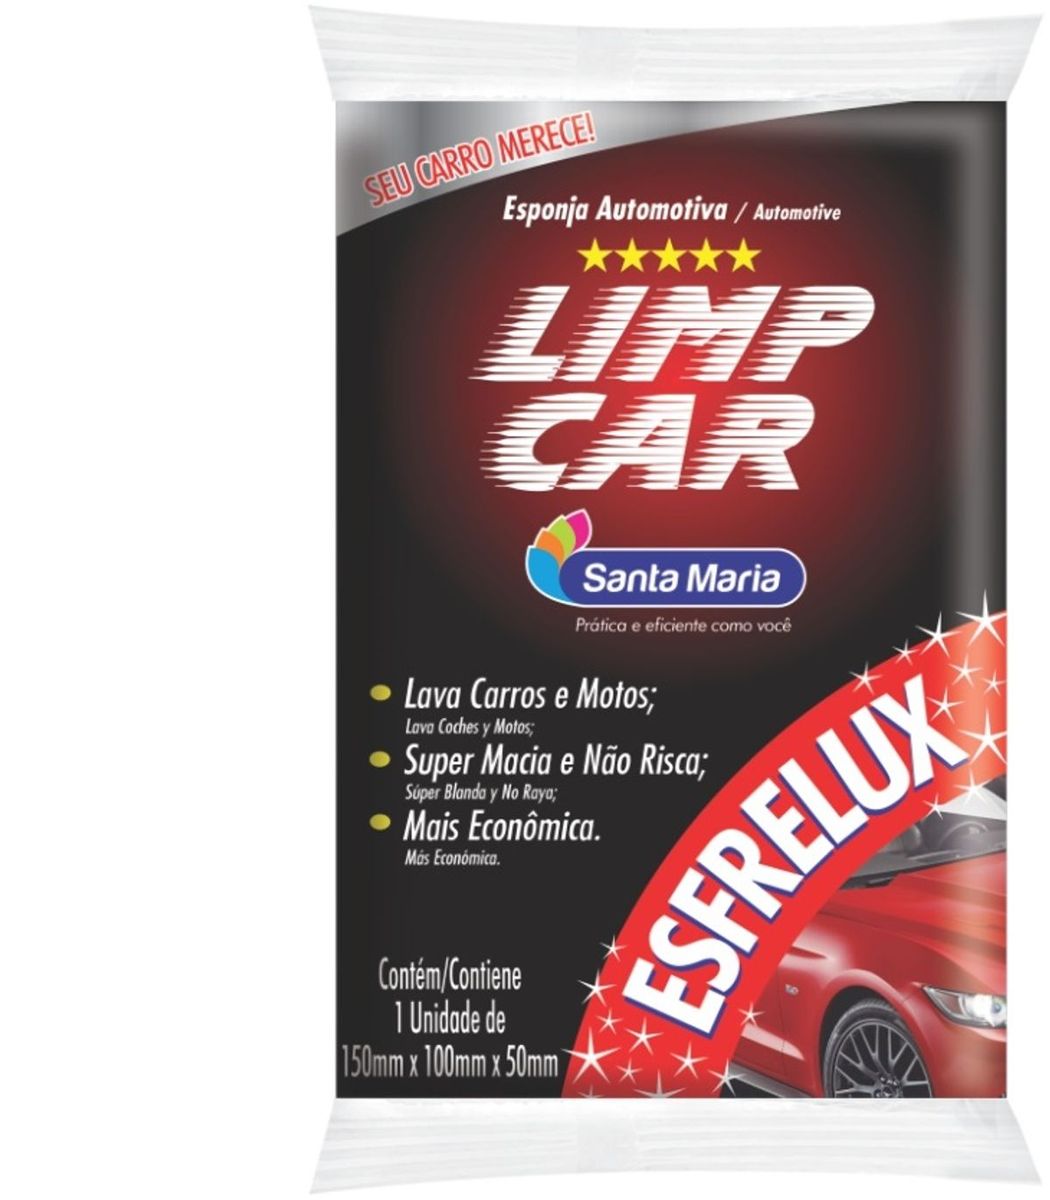 Esponja Automotiva Limp Car Esfrelux image number 0